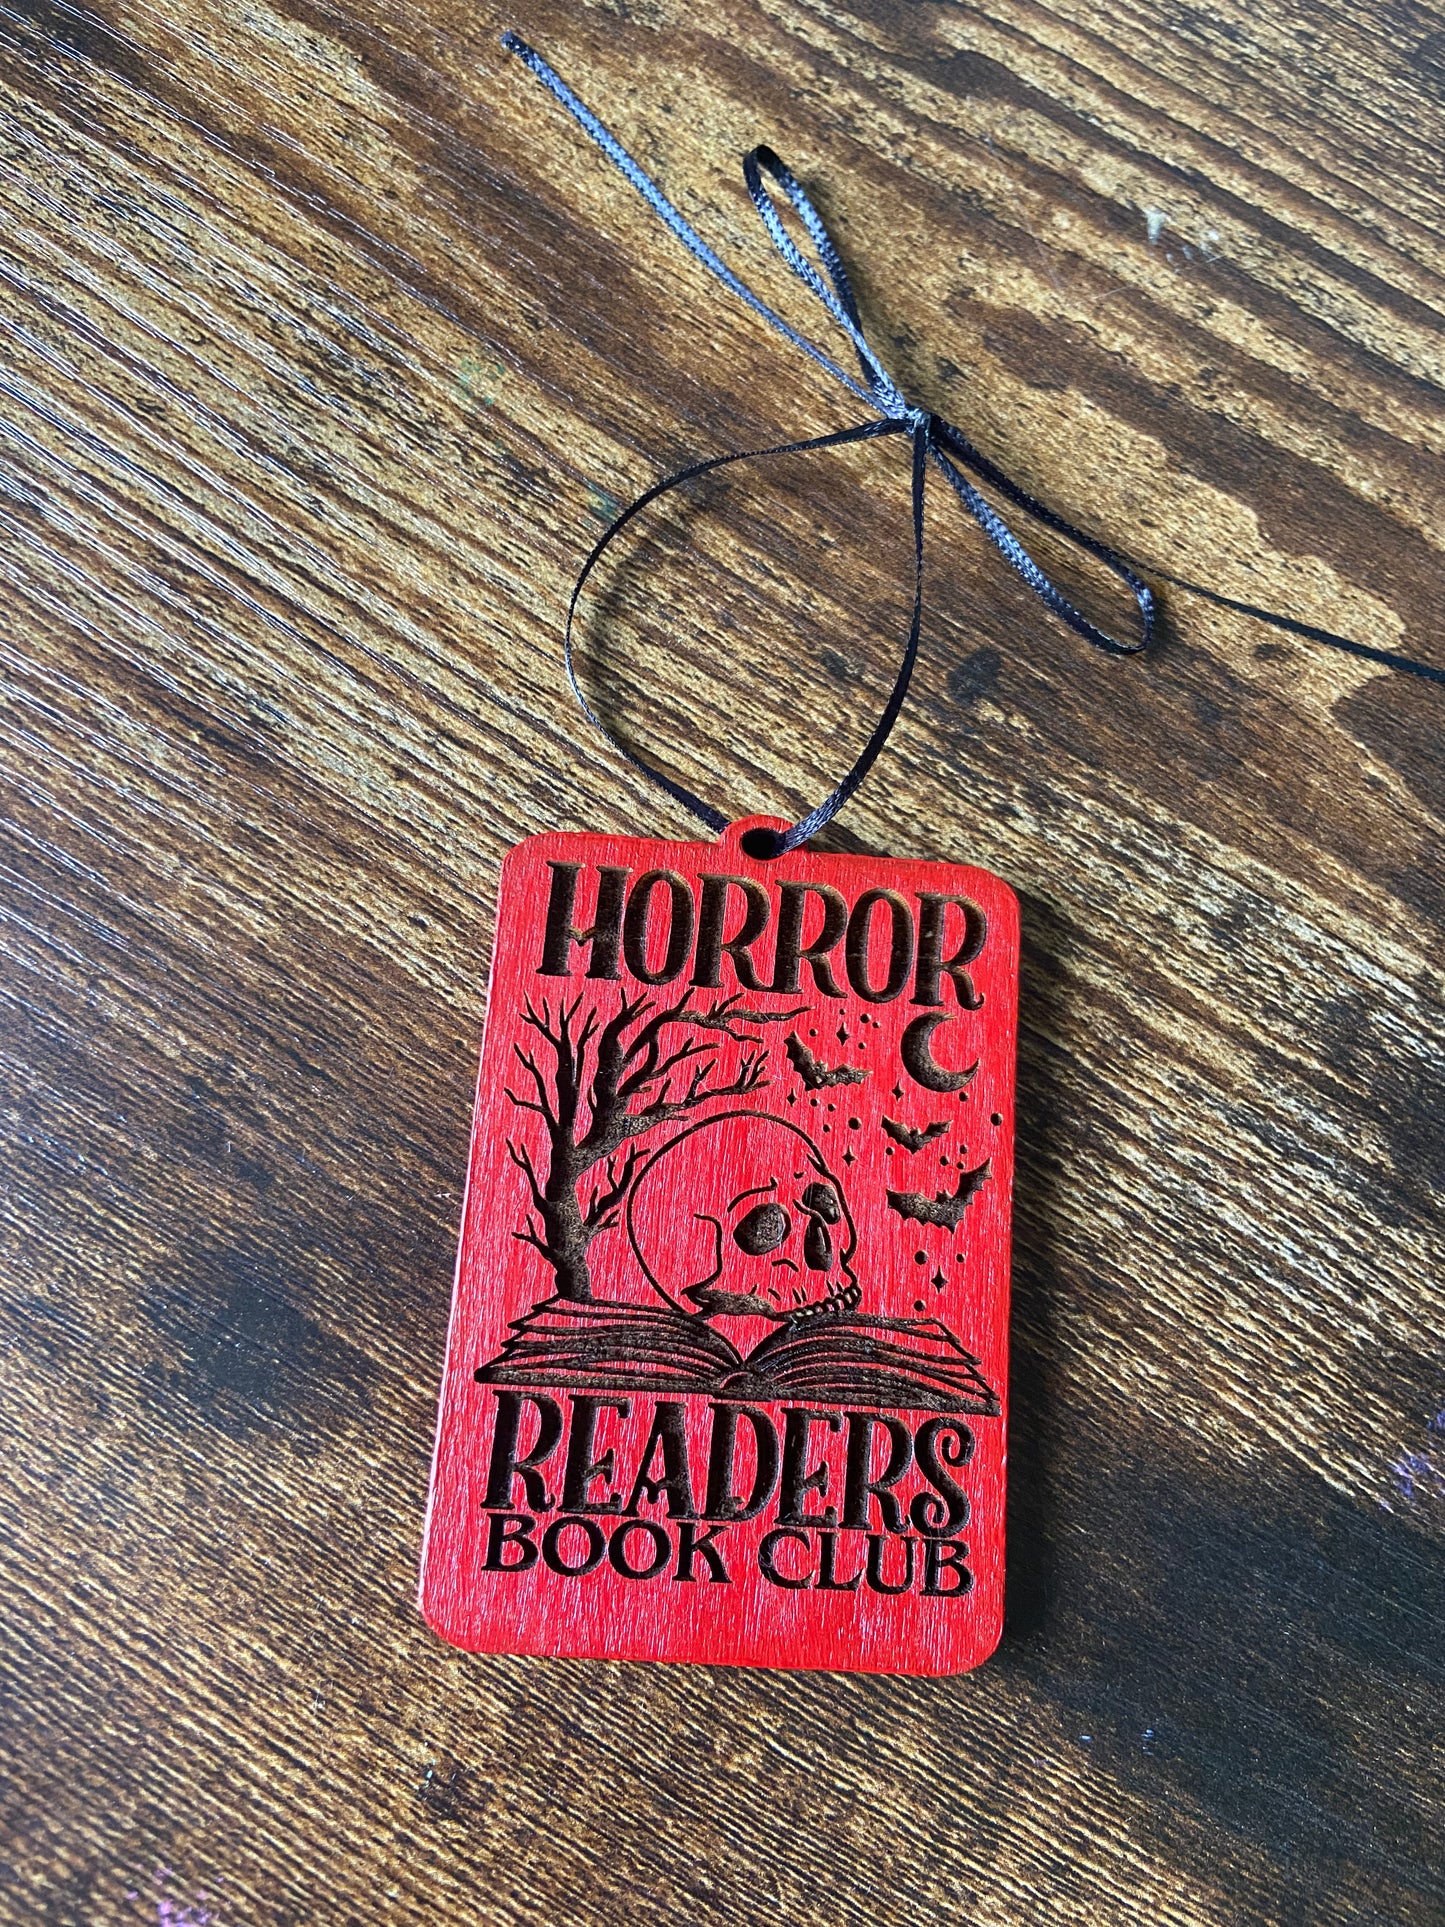 Horror Readers Book Club Ornament